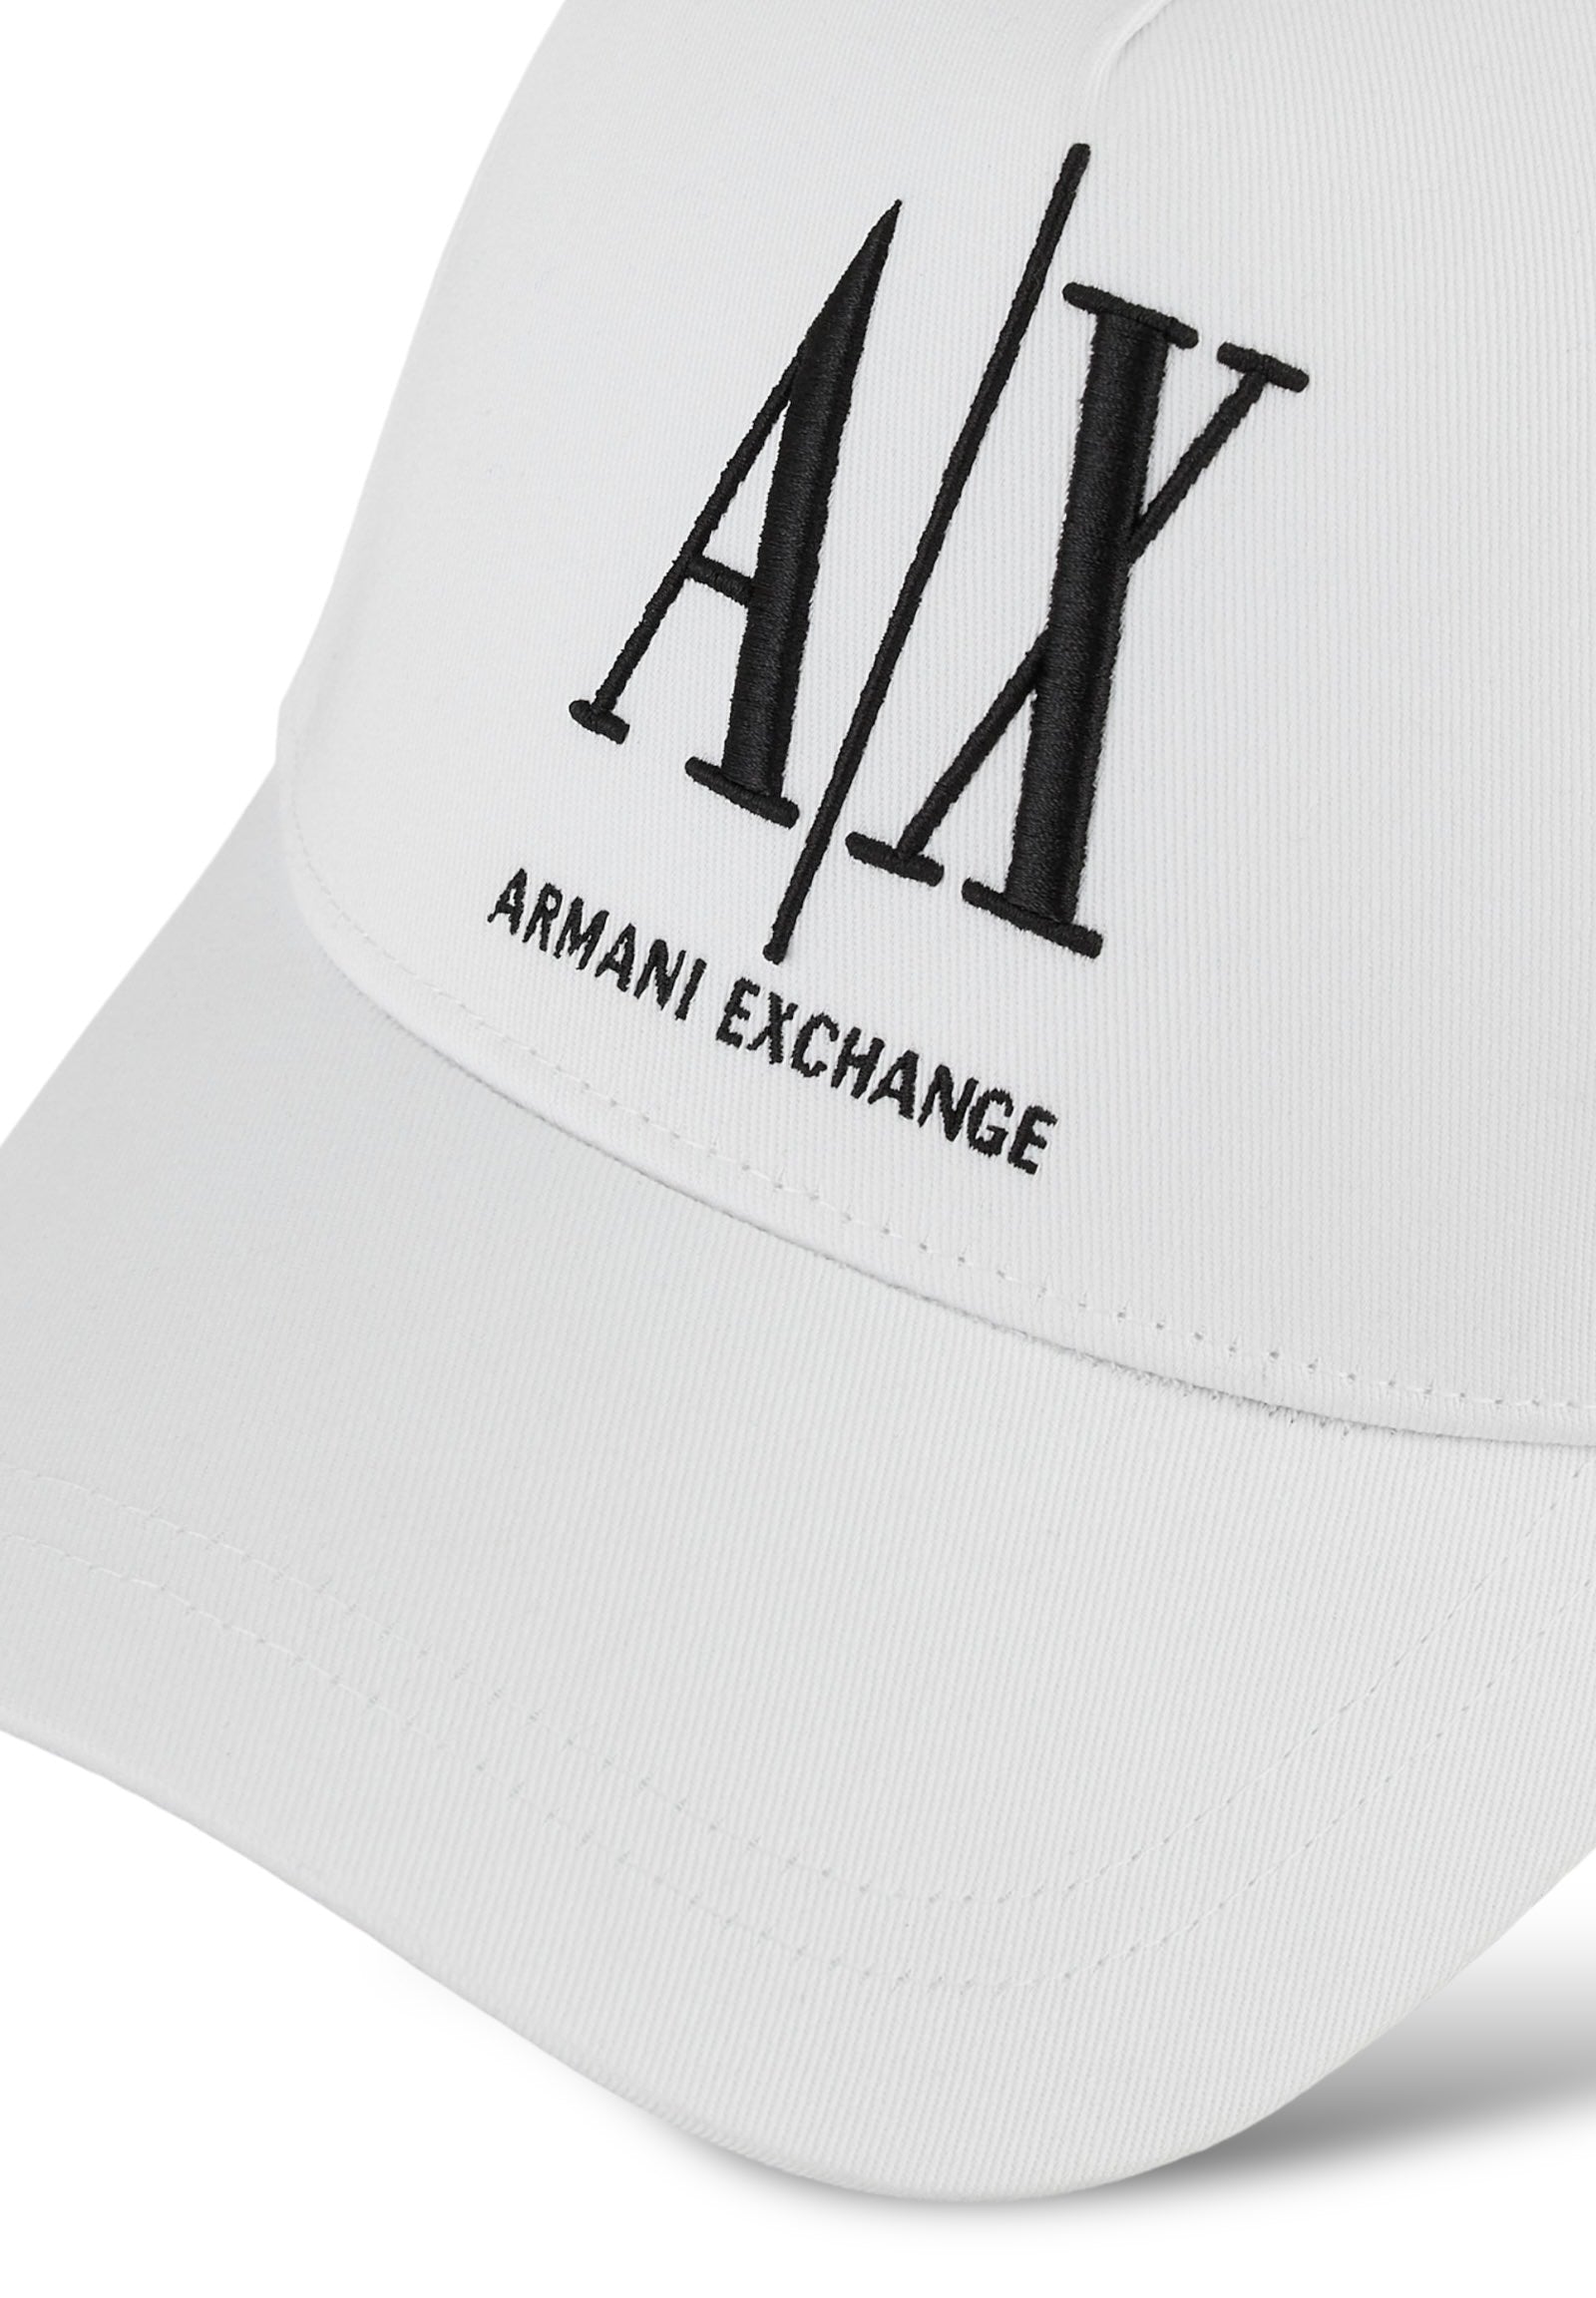 Armani Exchange Cappello Da Baseball 954047 Bianco